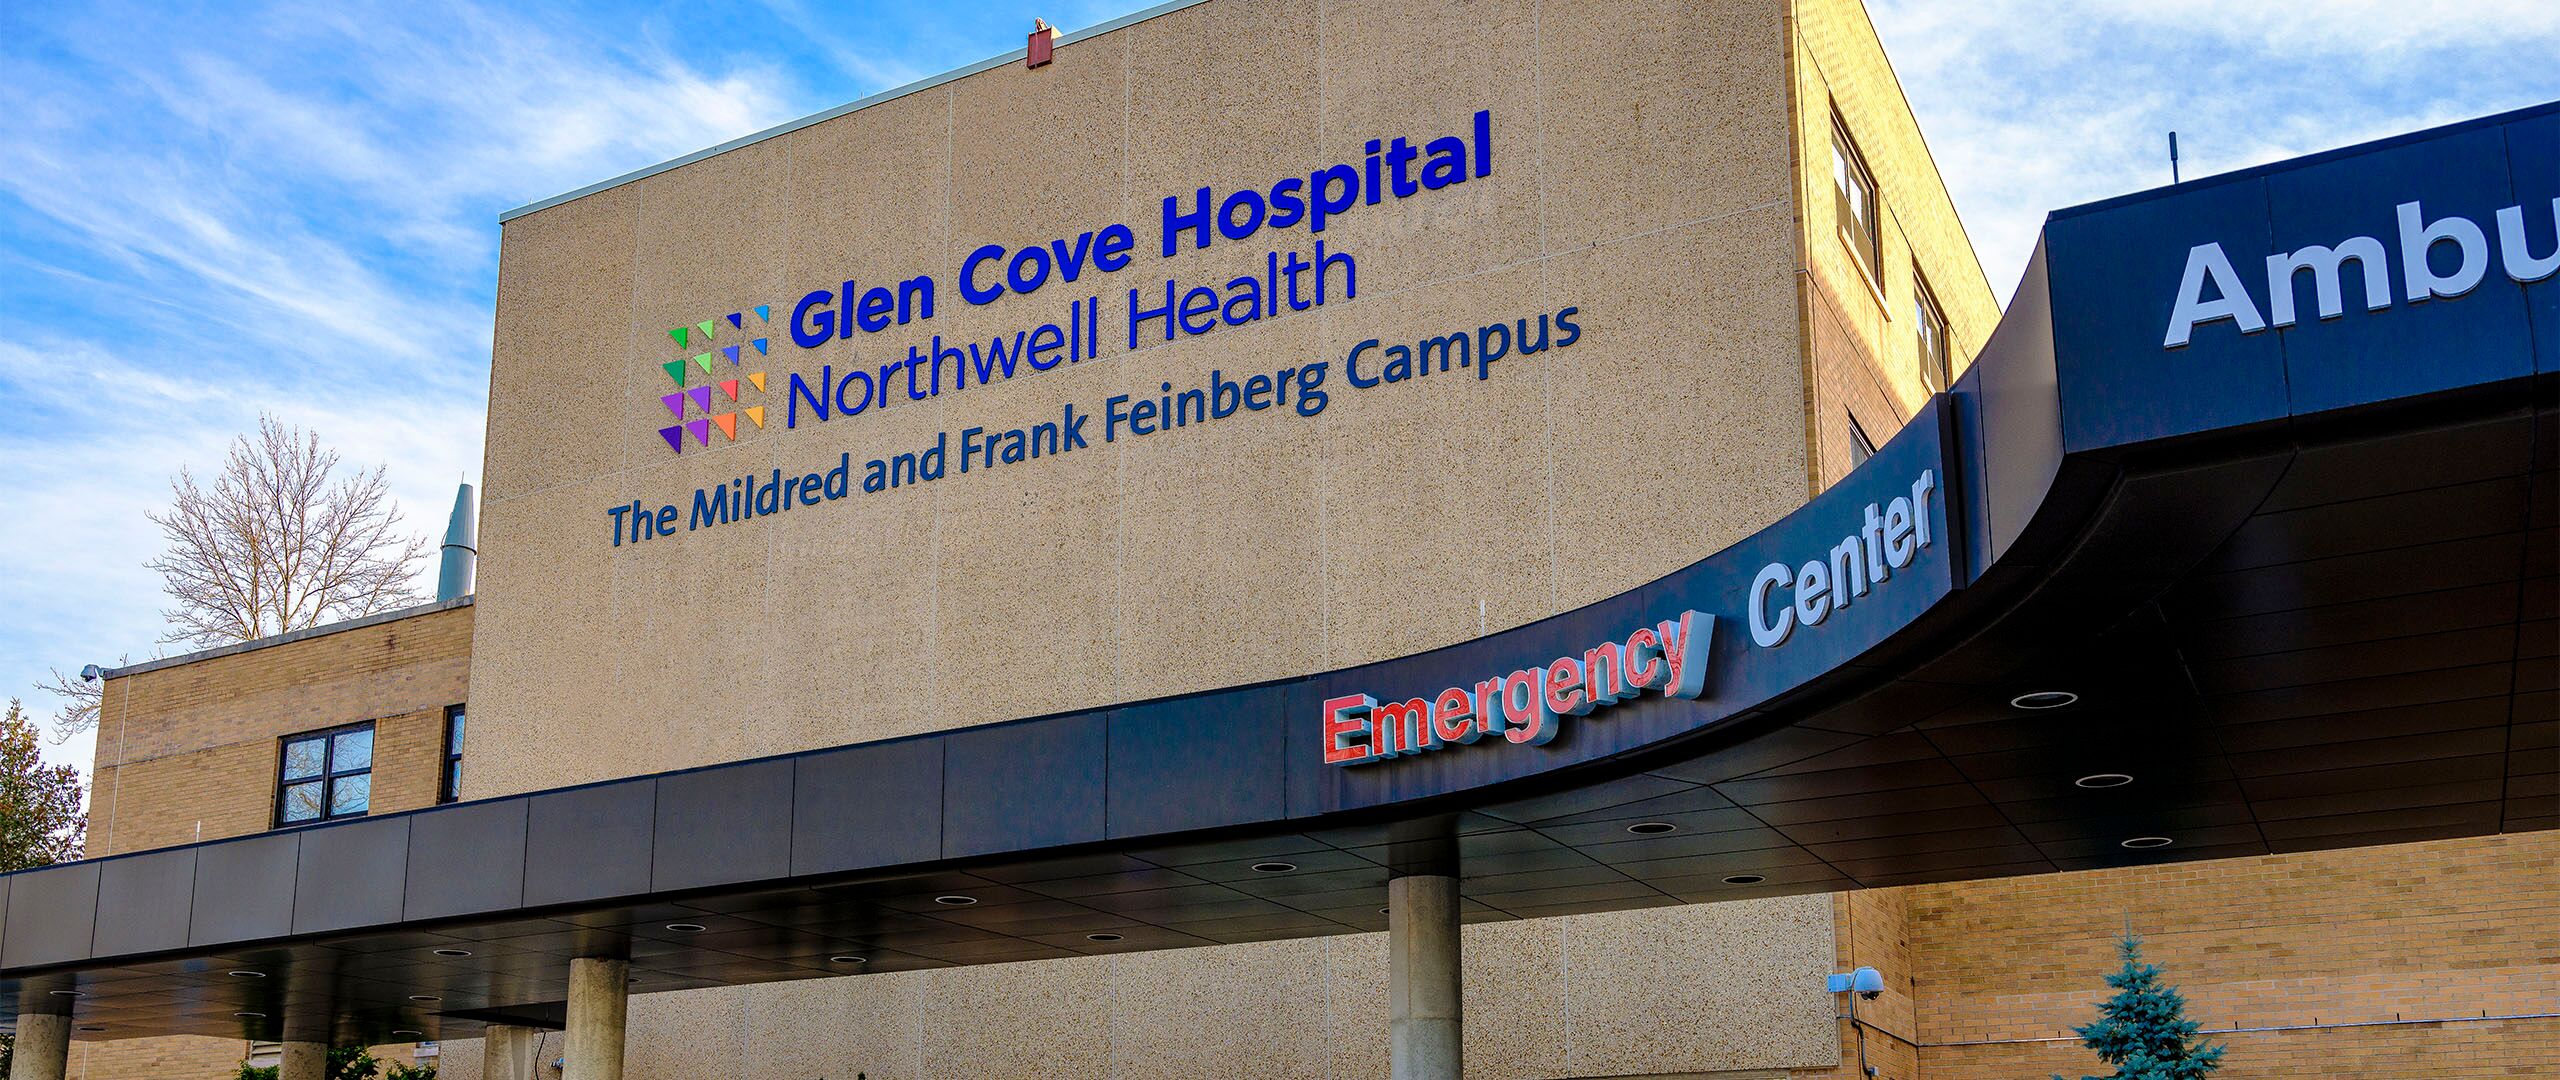 glen cove hospital